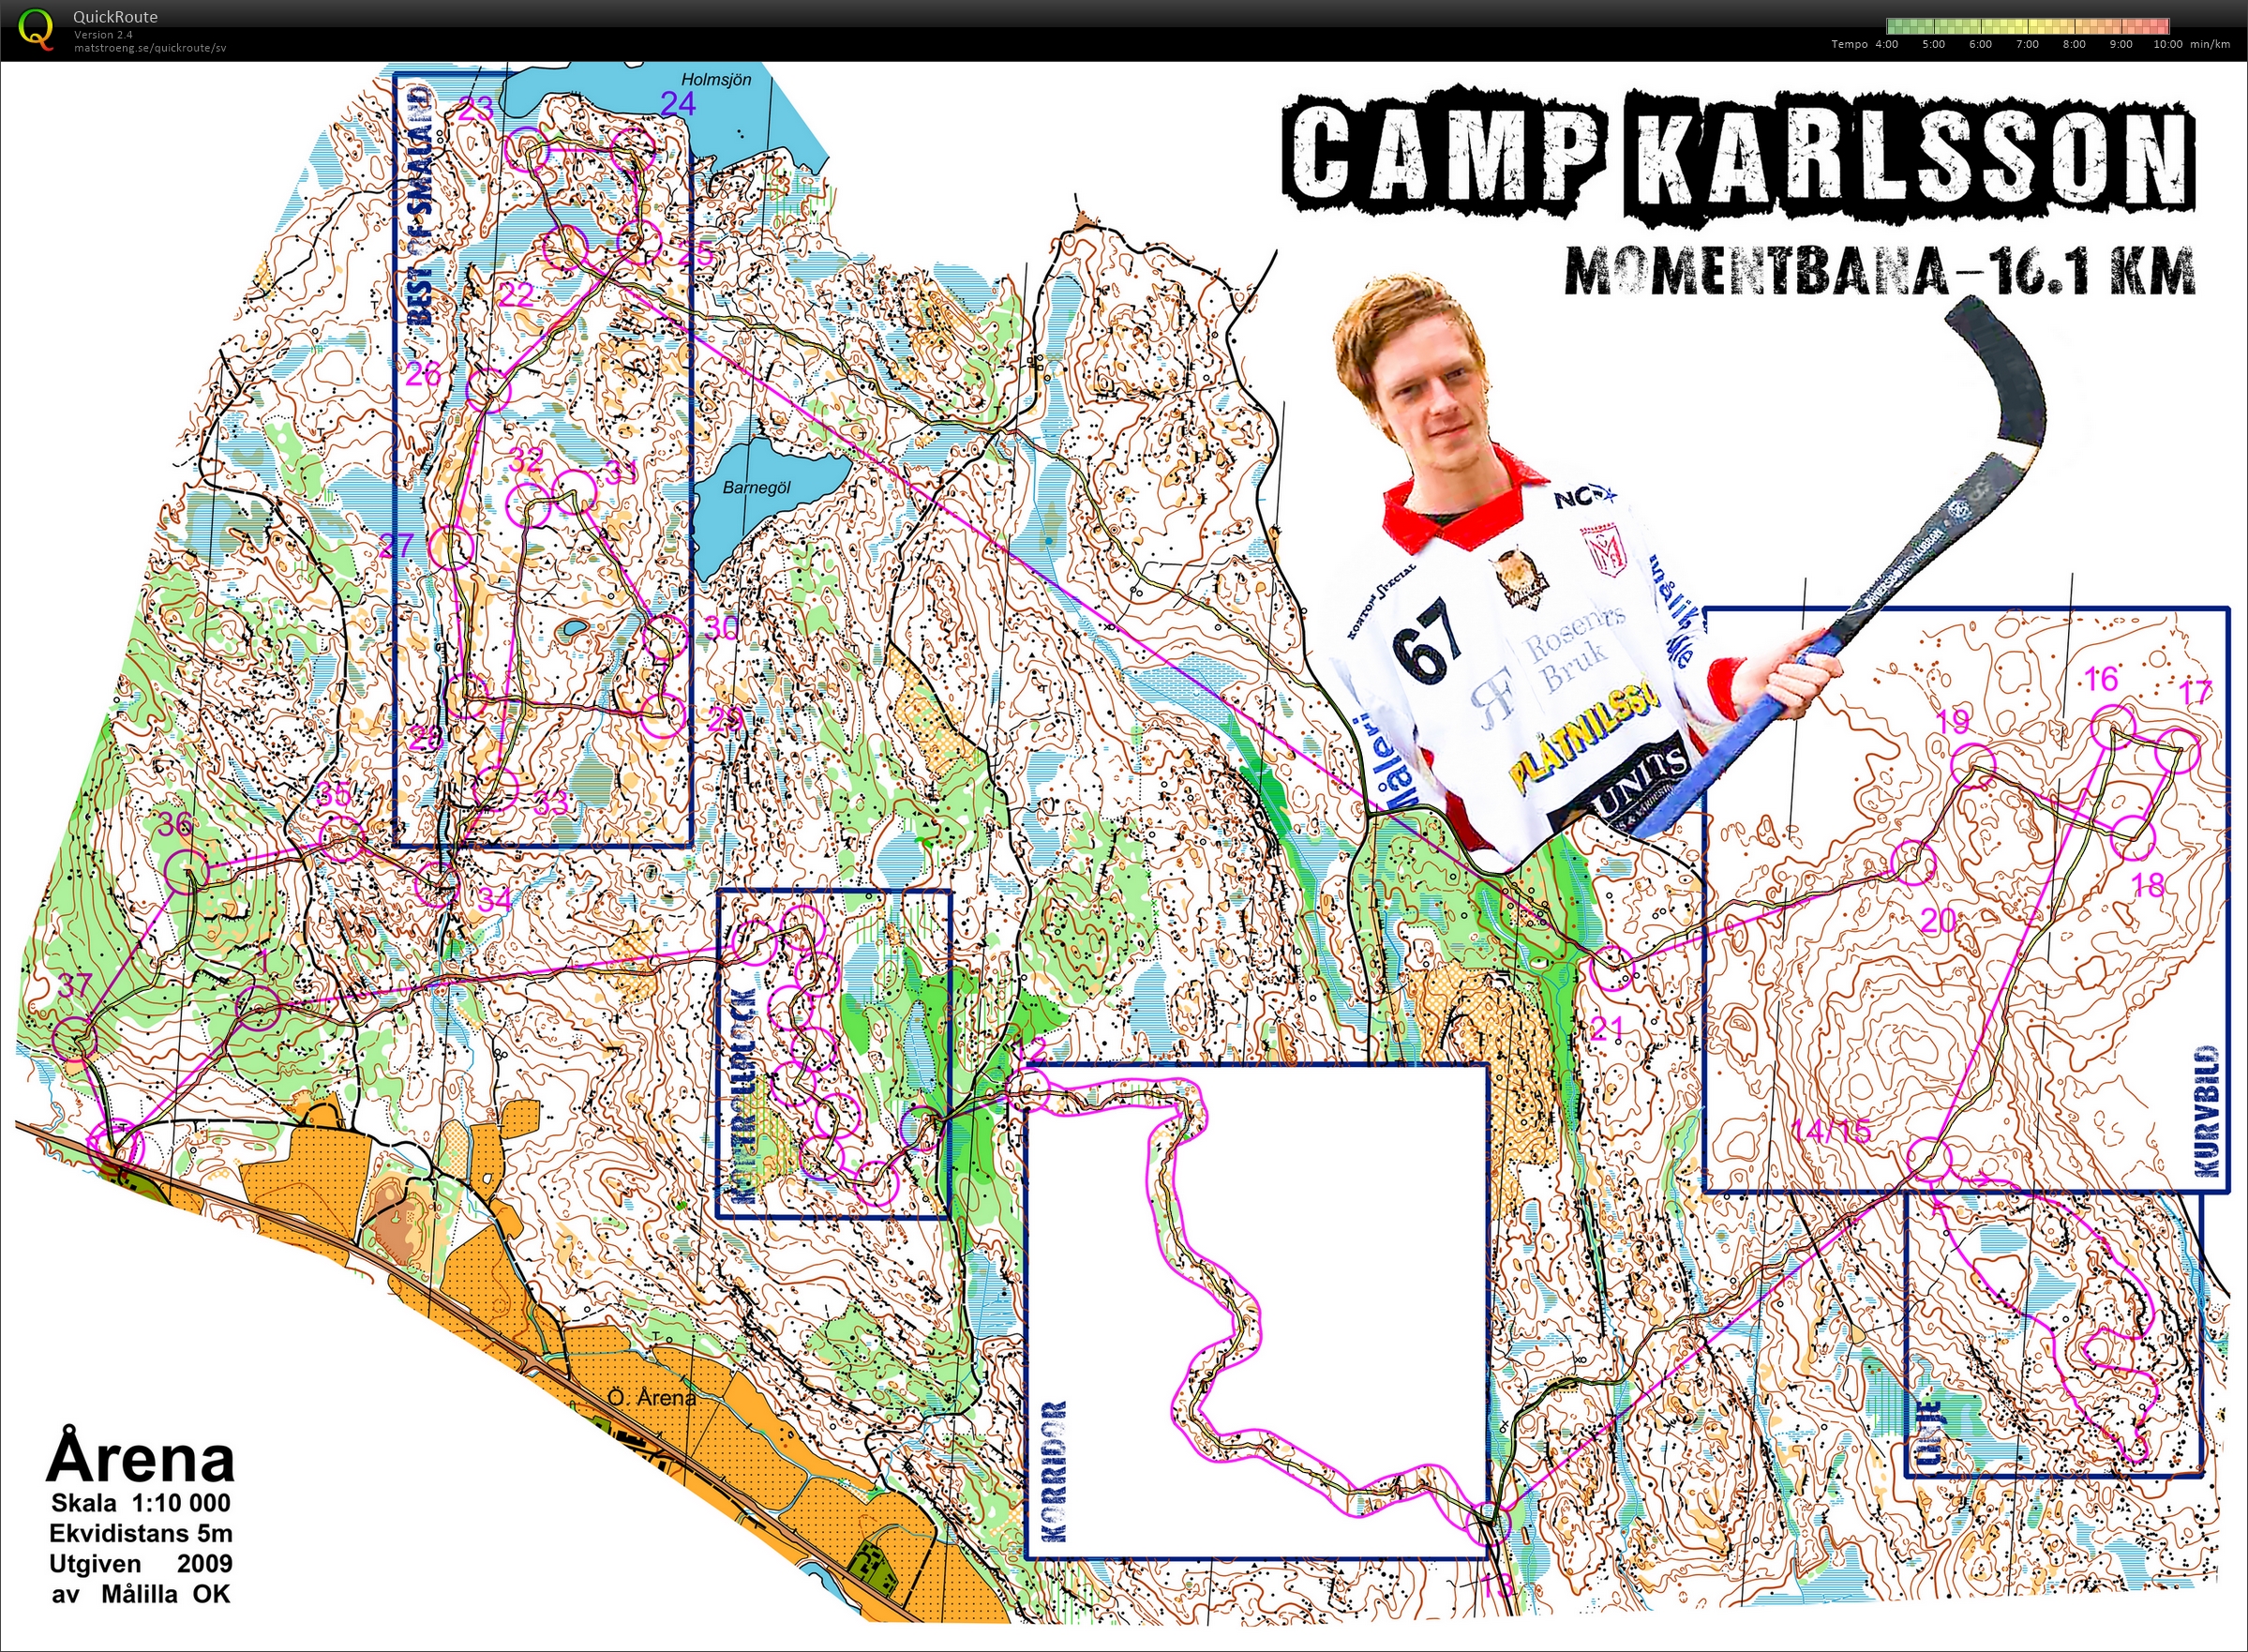 Camp Karlsson #6: Momentbana (13-12-2015)